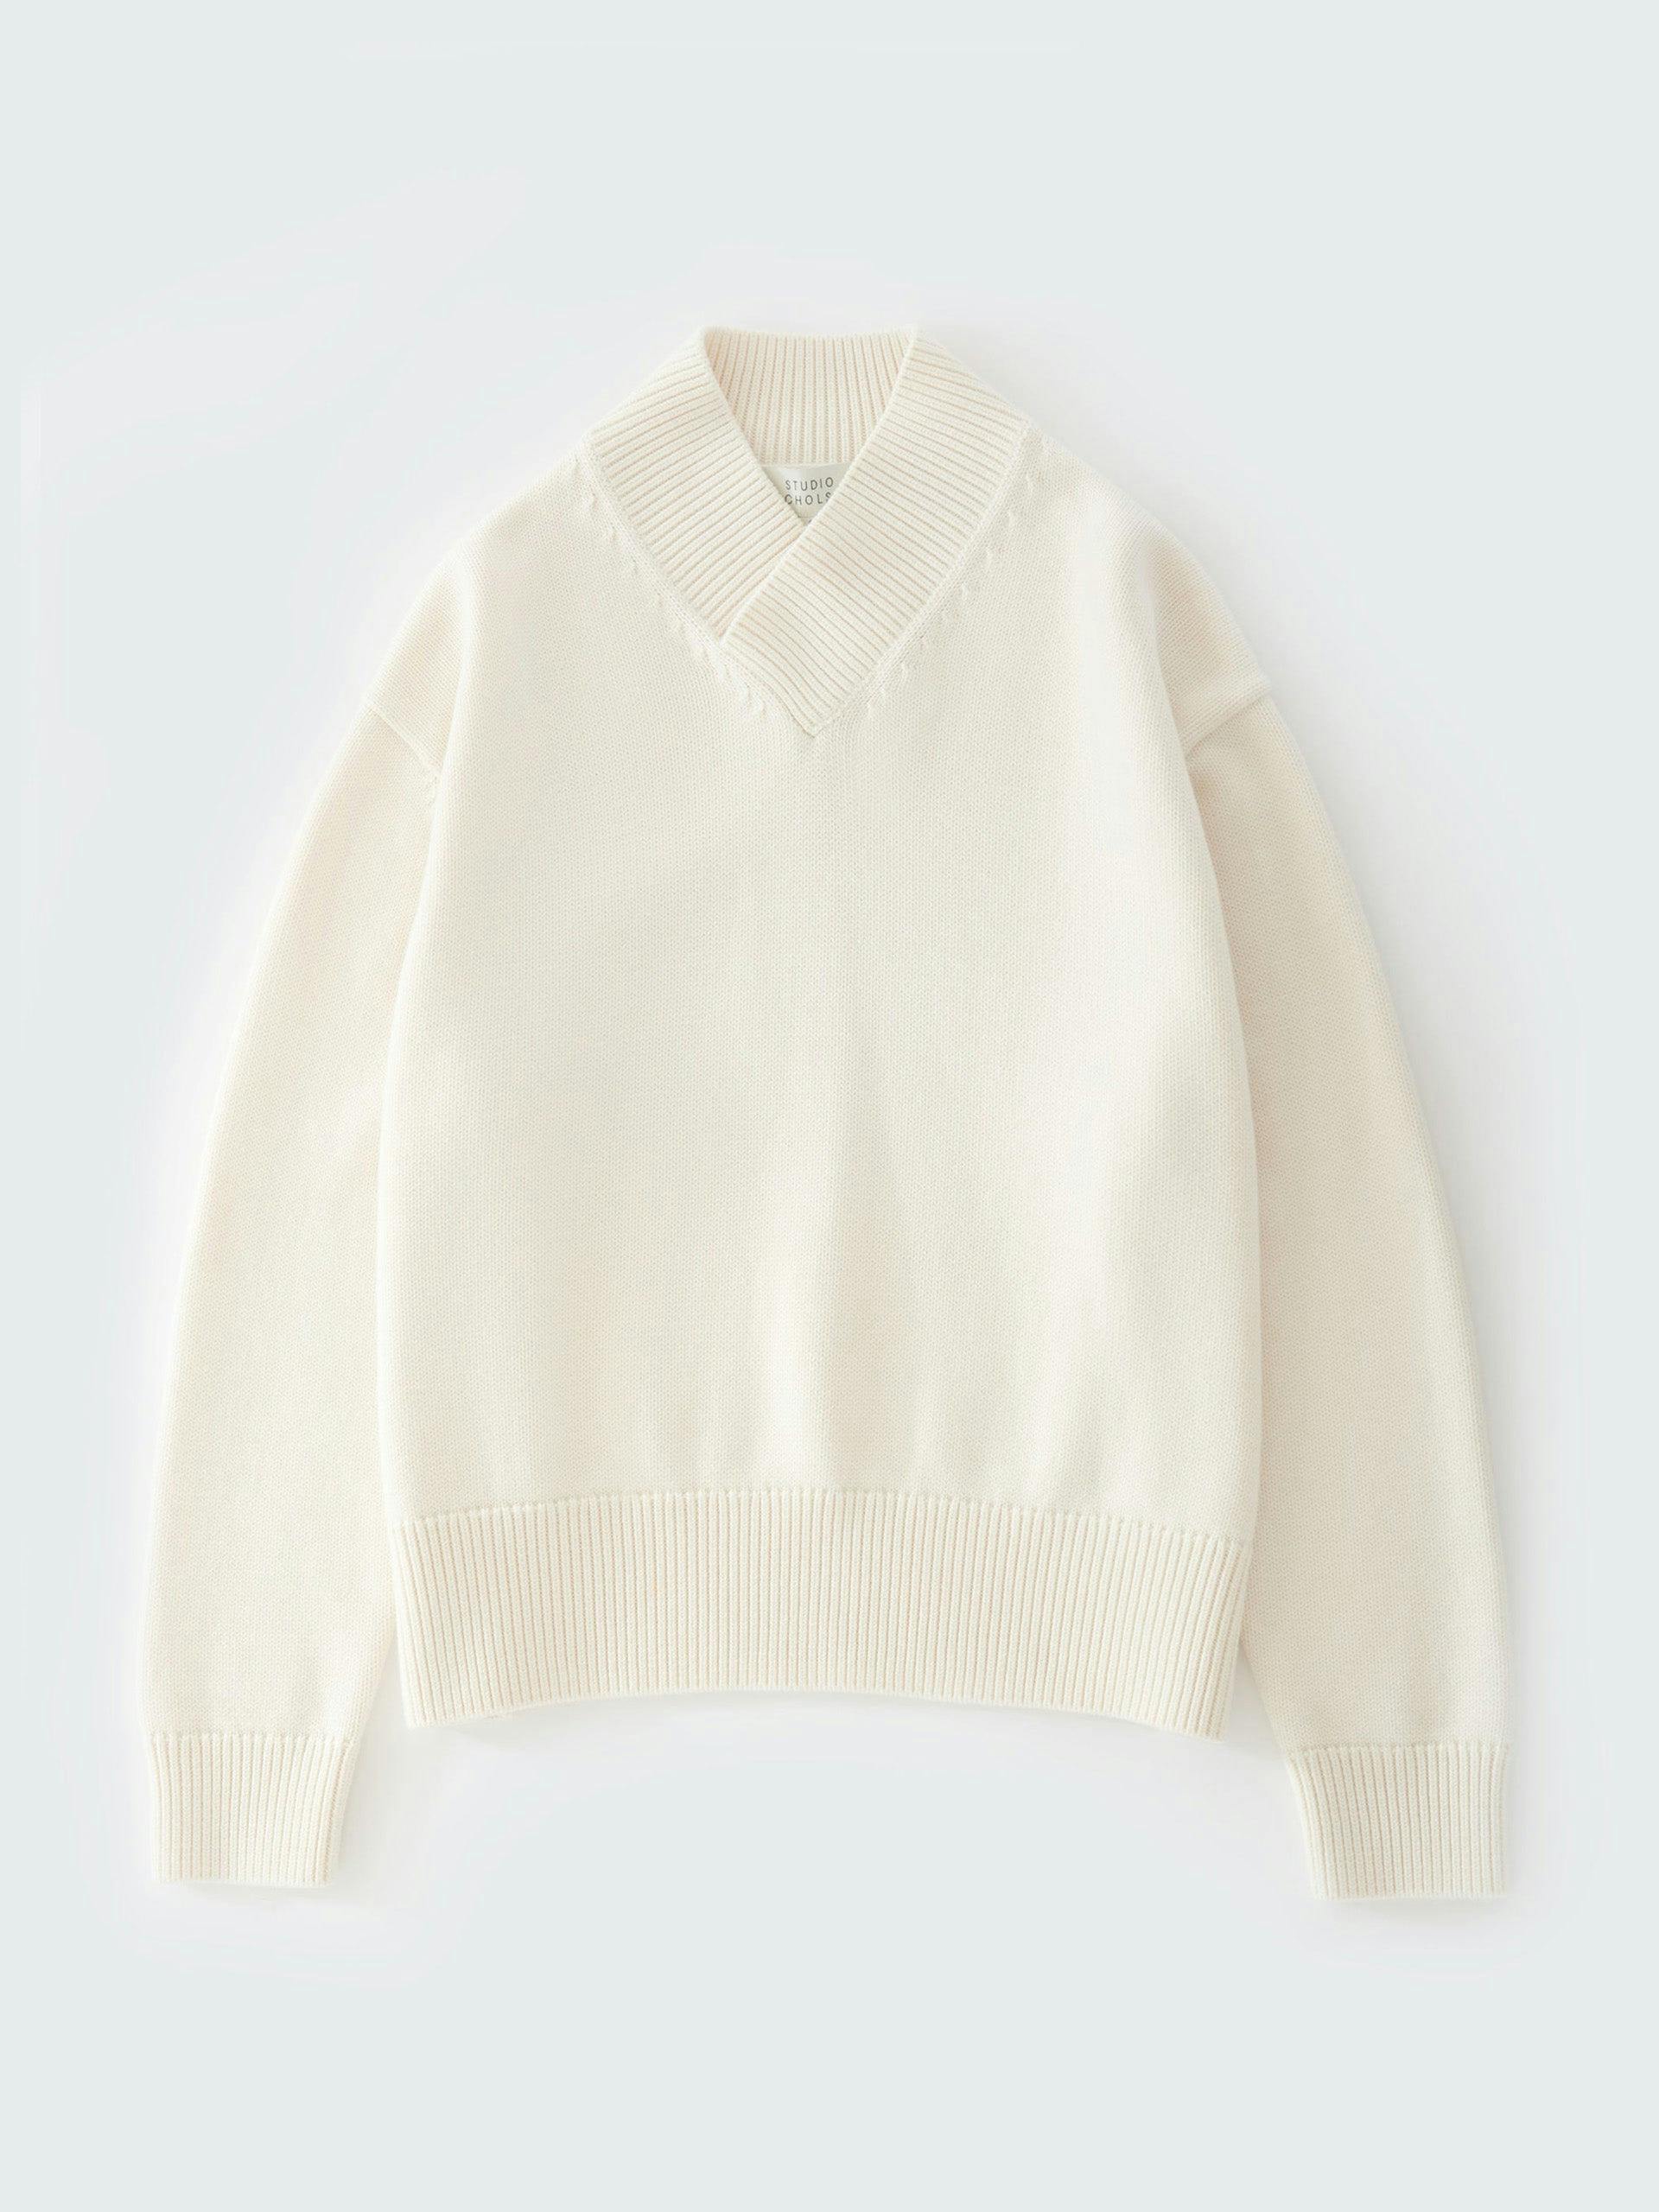 Cropped knit jumper